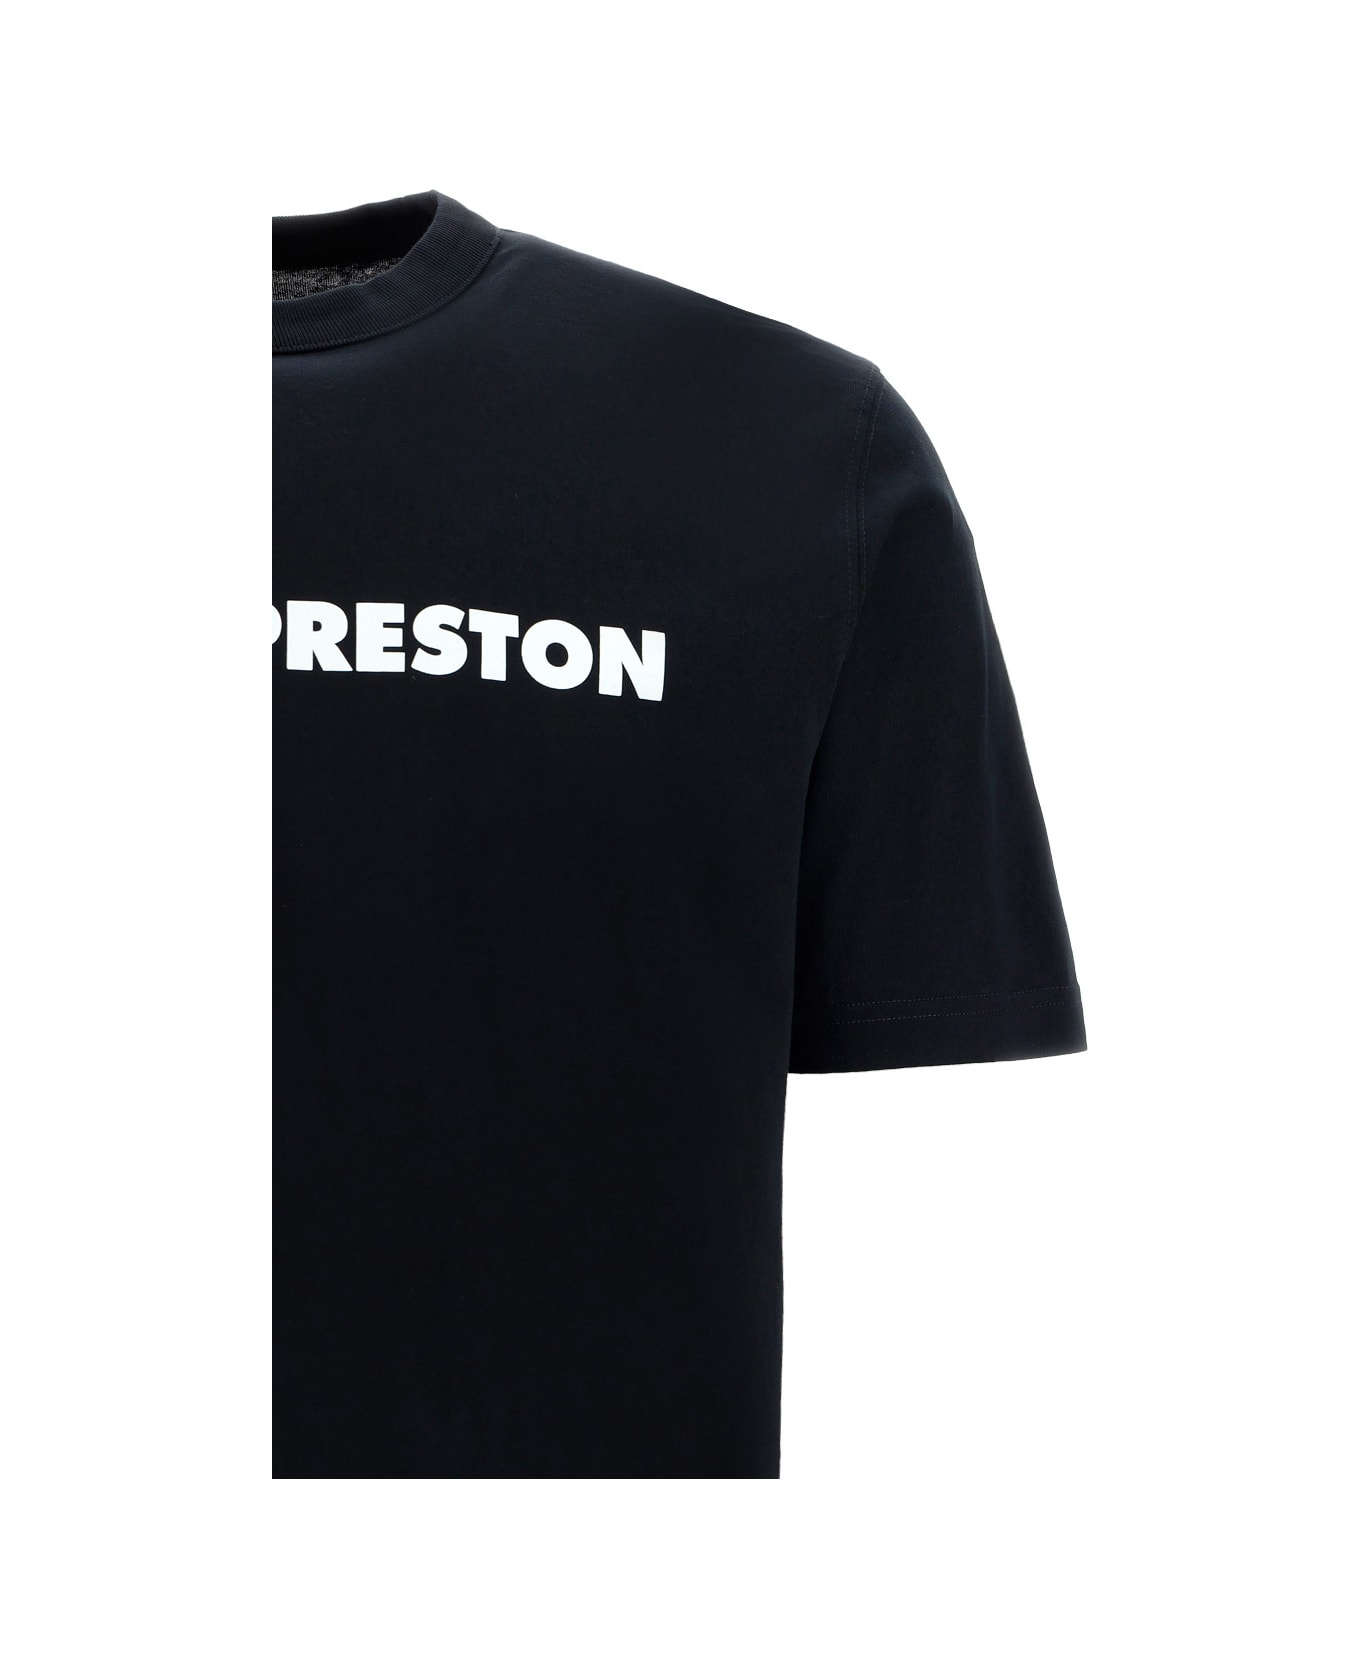 HERON PRESTON T-shirt 'this Is Not' - black シャツ